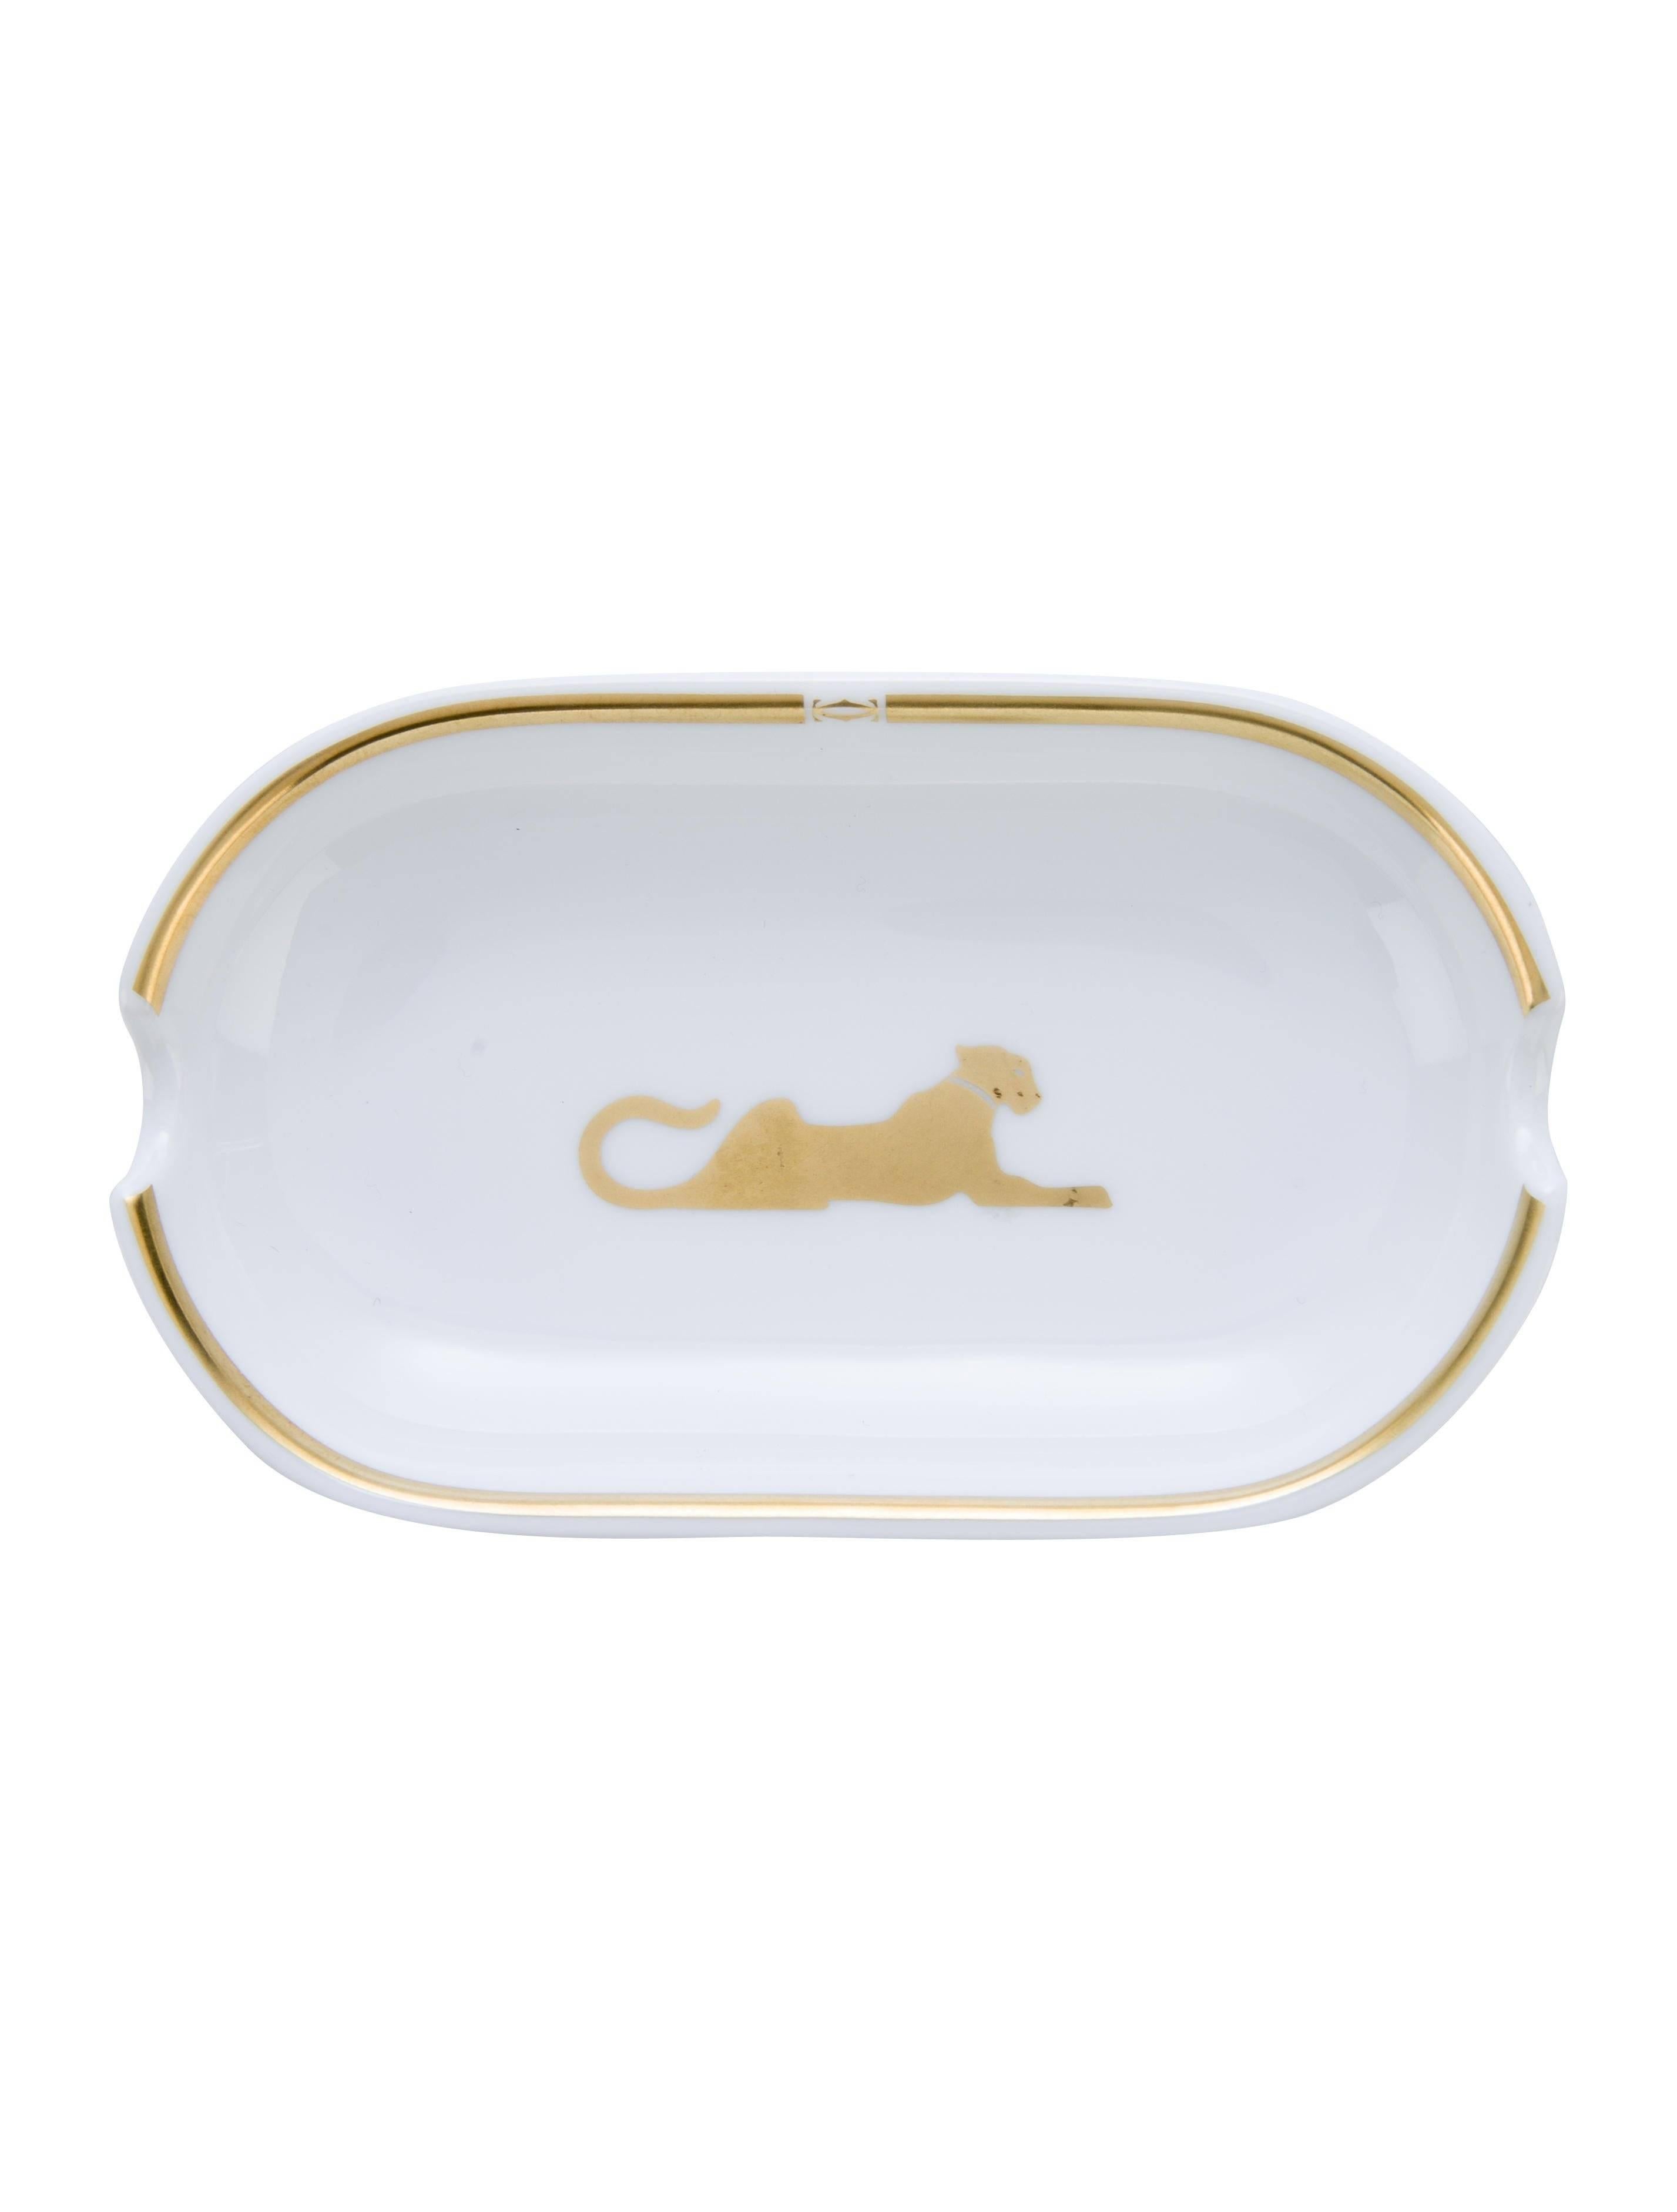 Cartier New Panther Porcelain Men's Gold White Desk Table Trinket Tray Ashtray